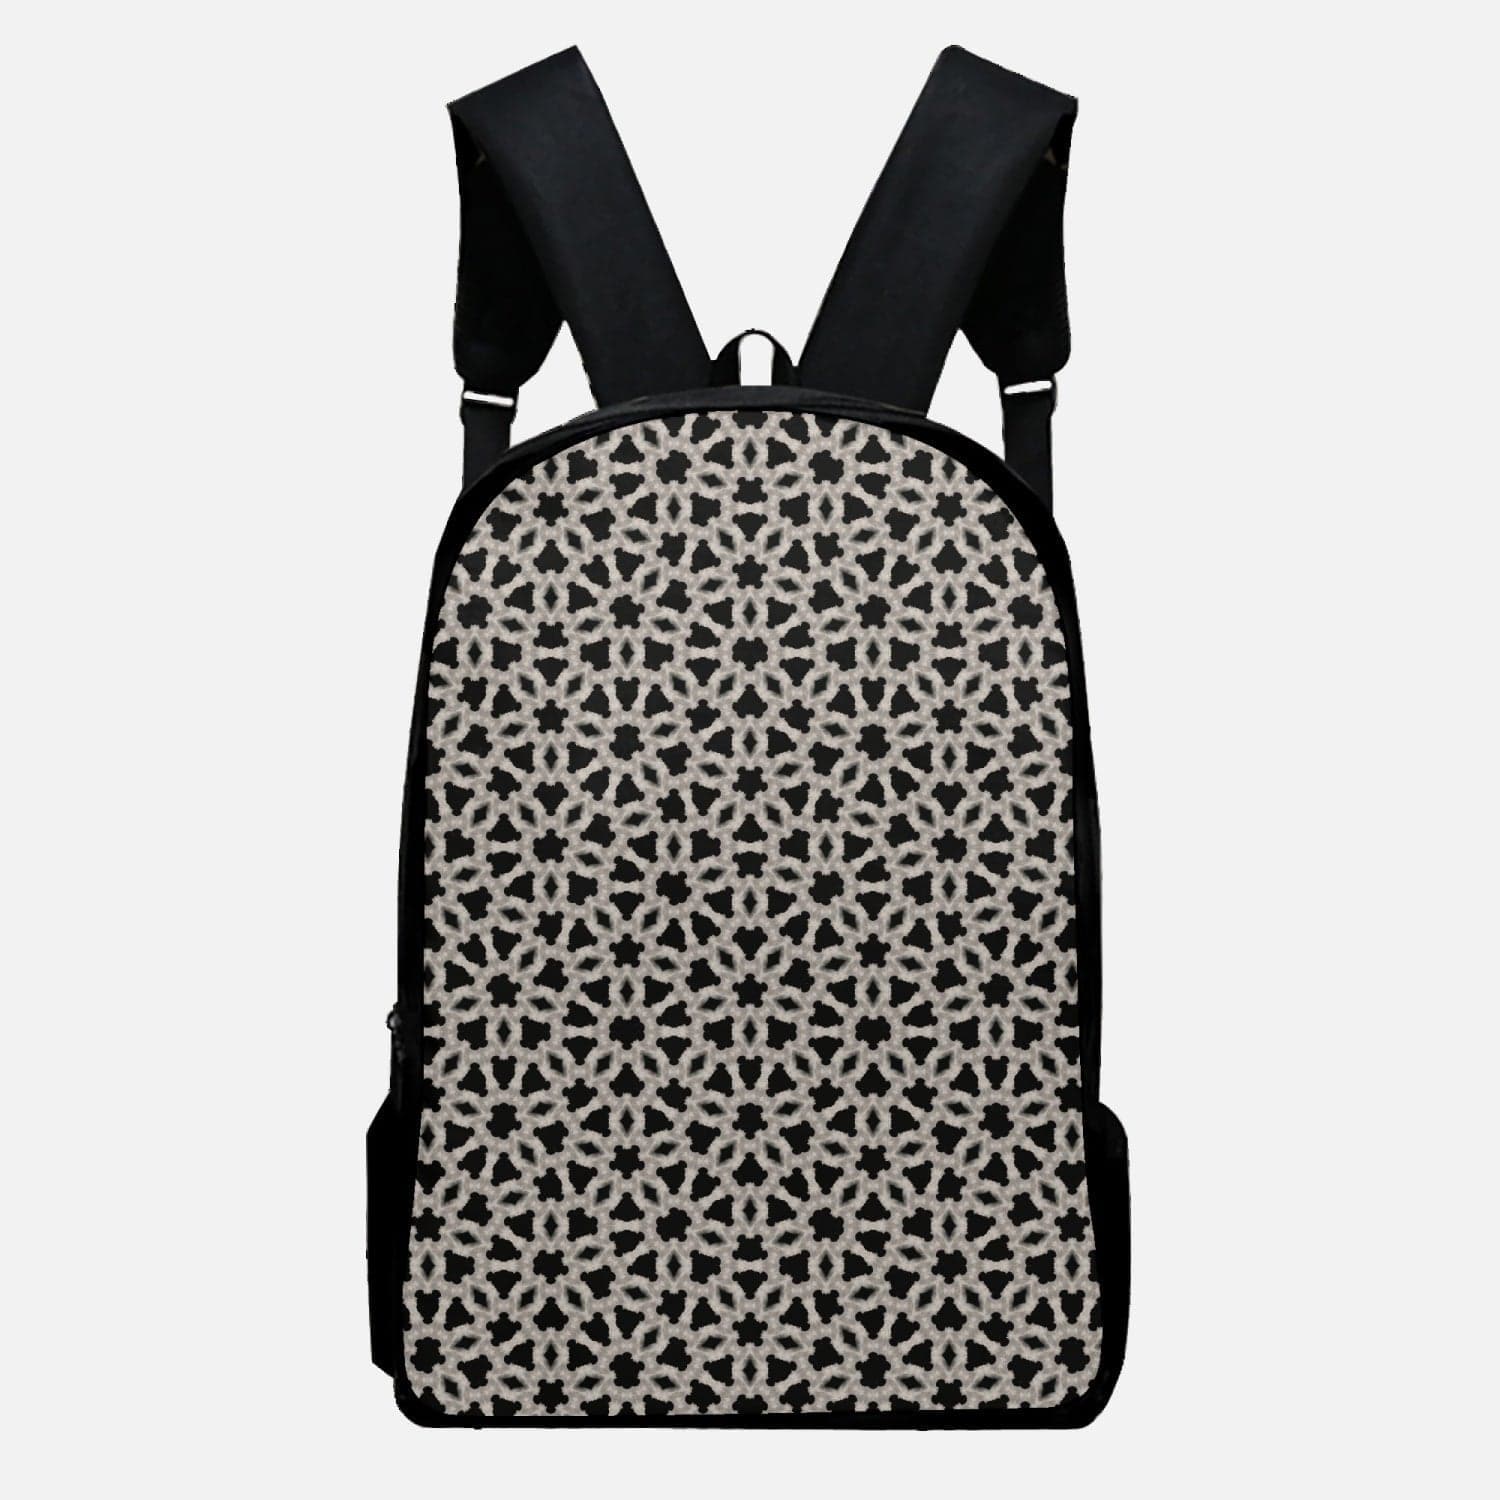 Moon rose. Oxford Bags  Stylish Backpack Set 3pcs, designed by Sensus Studio Design